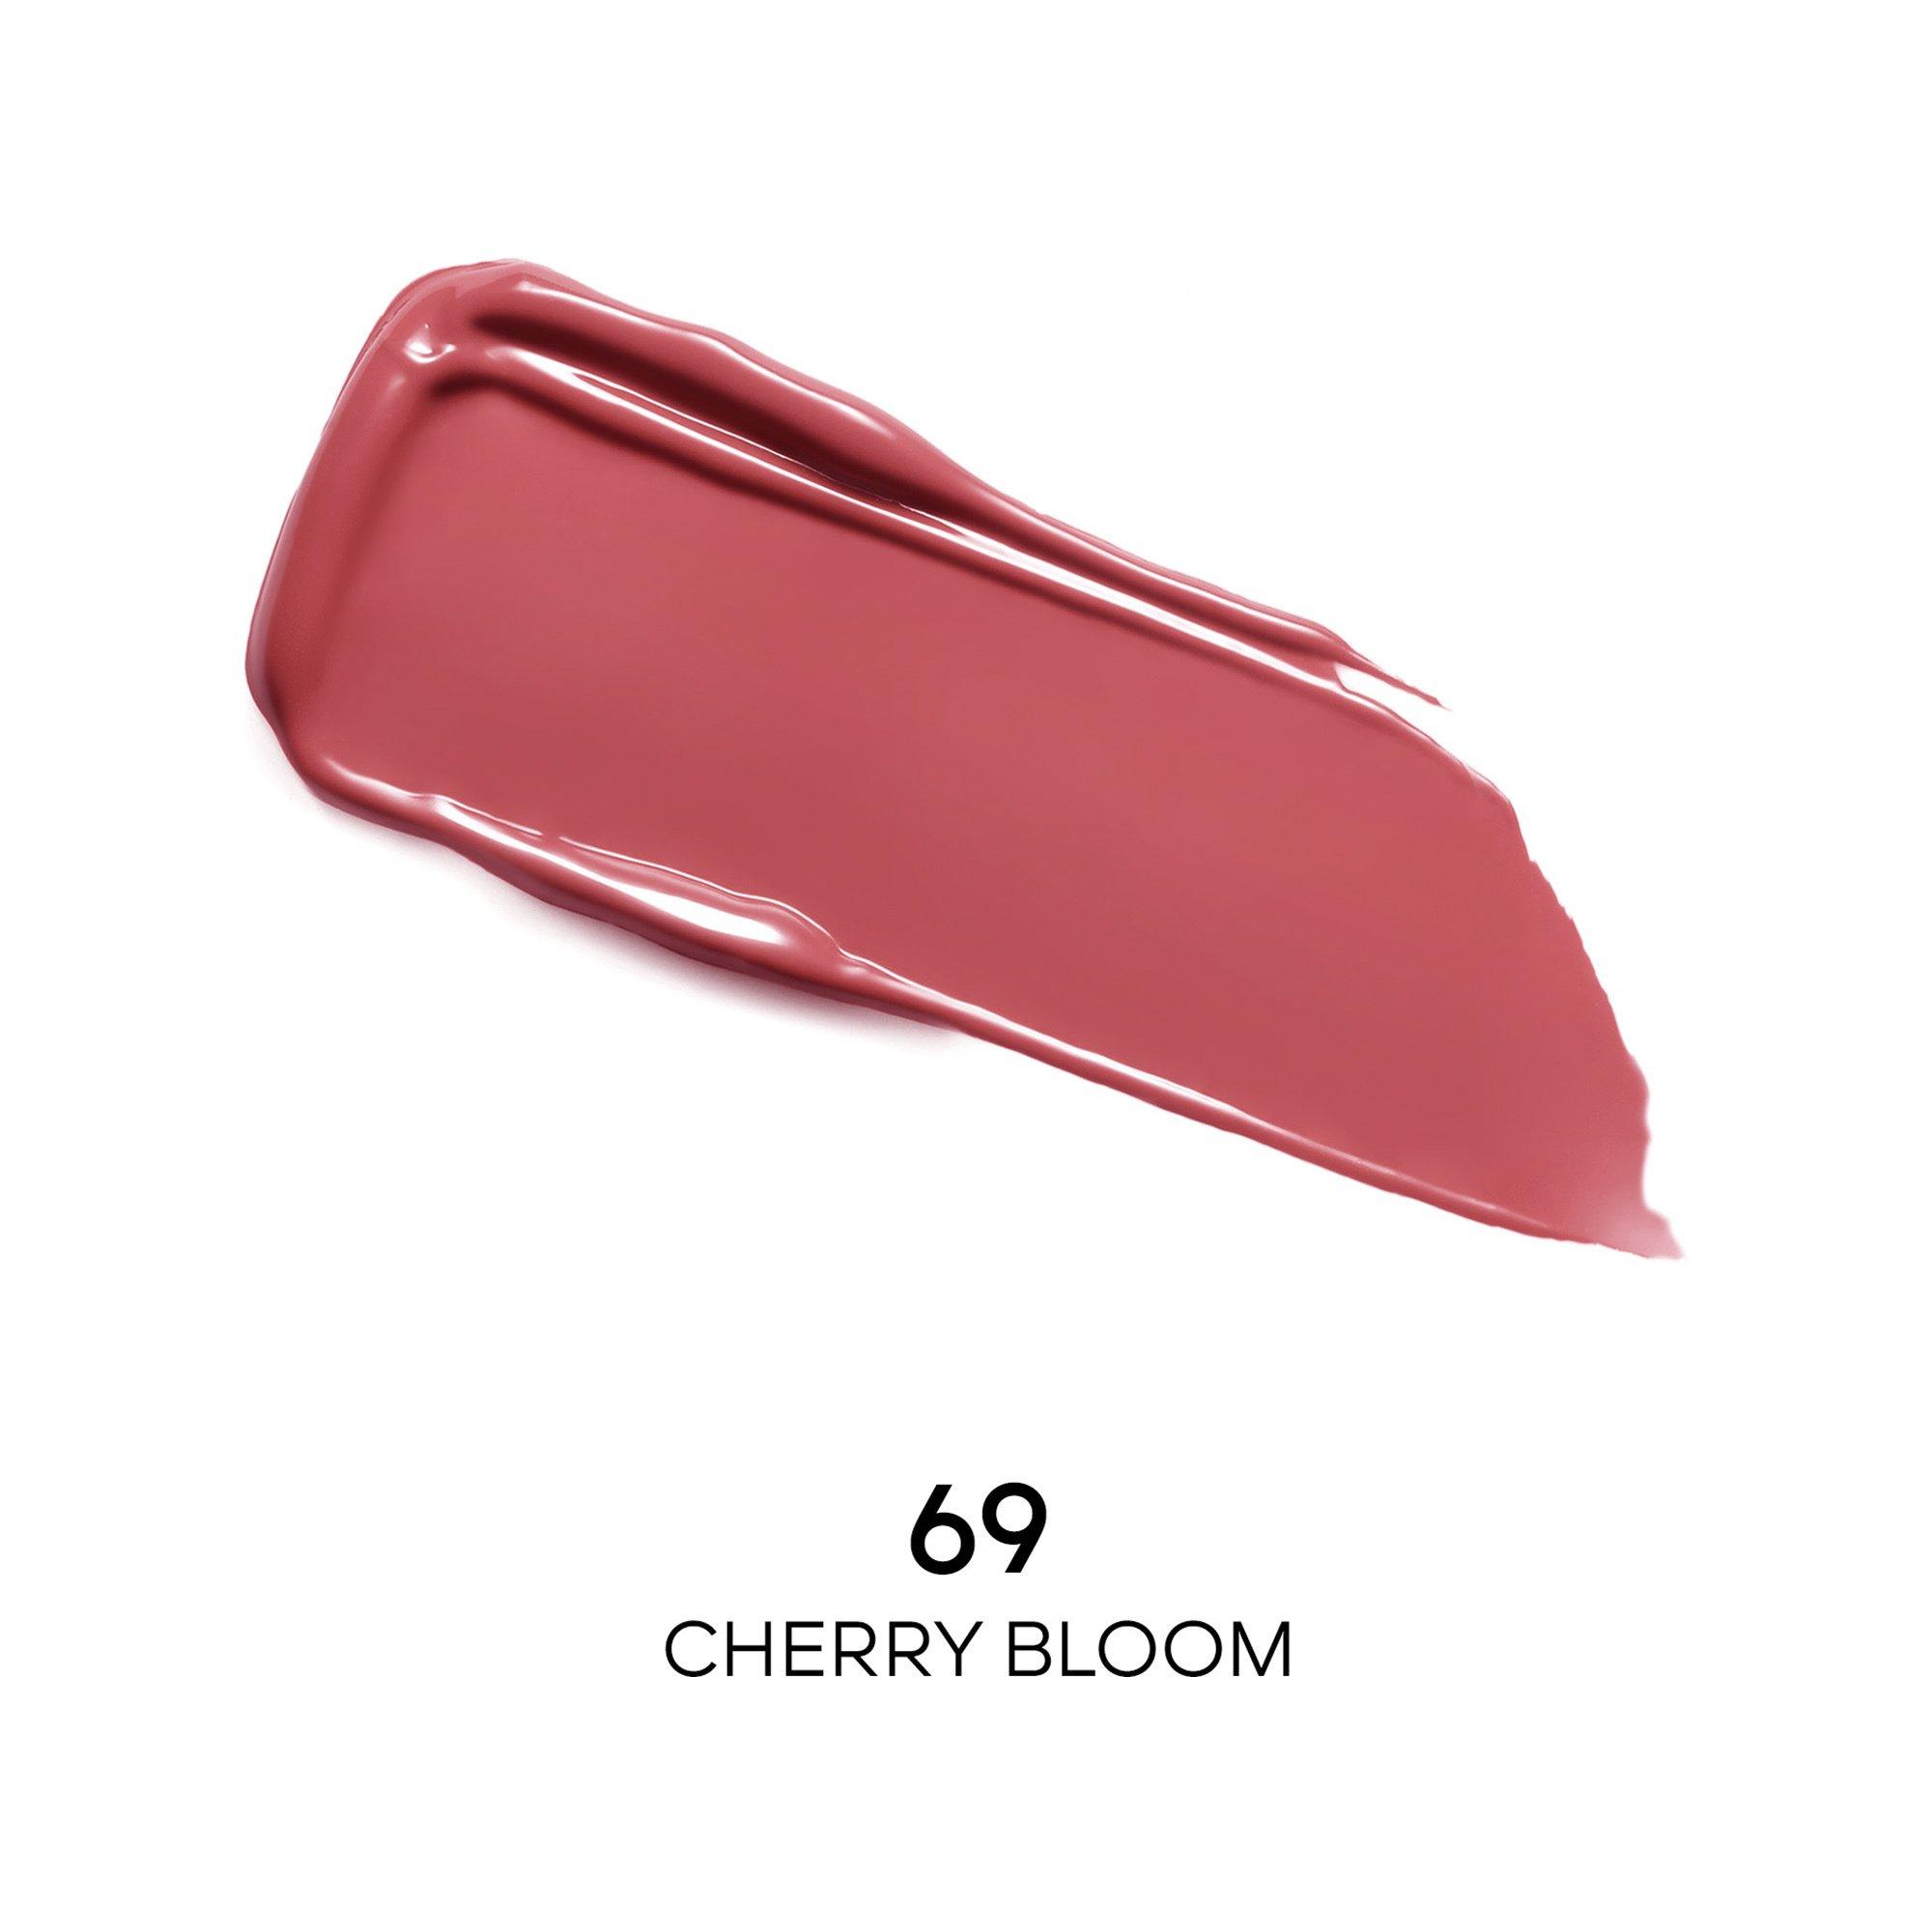 Guerlain  Rouge G Satin Long wear and intense colour satin lipstick 